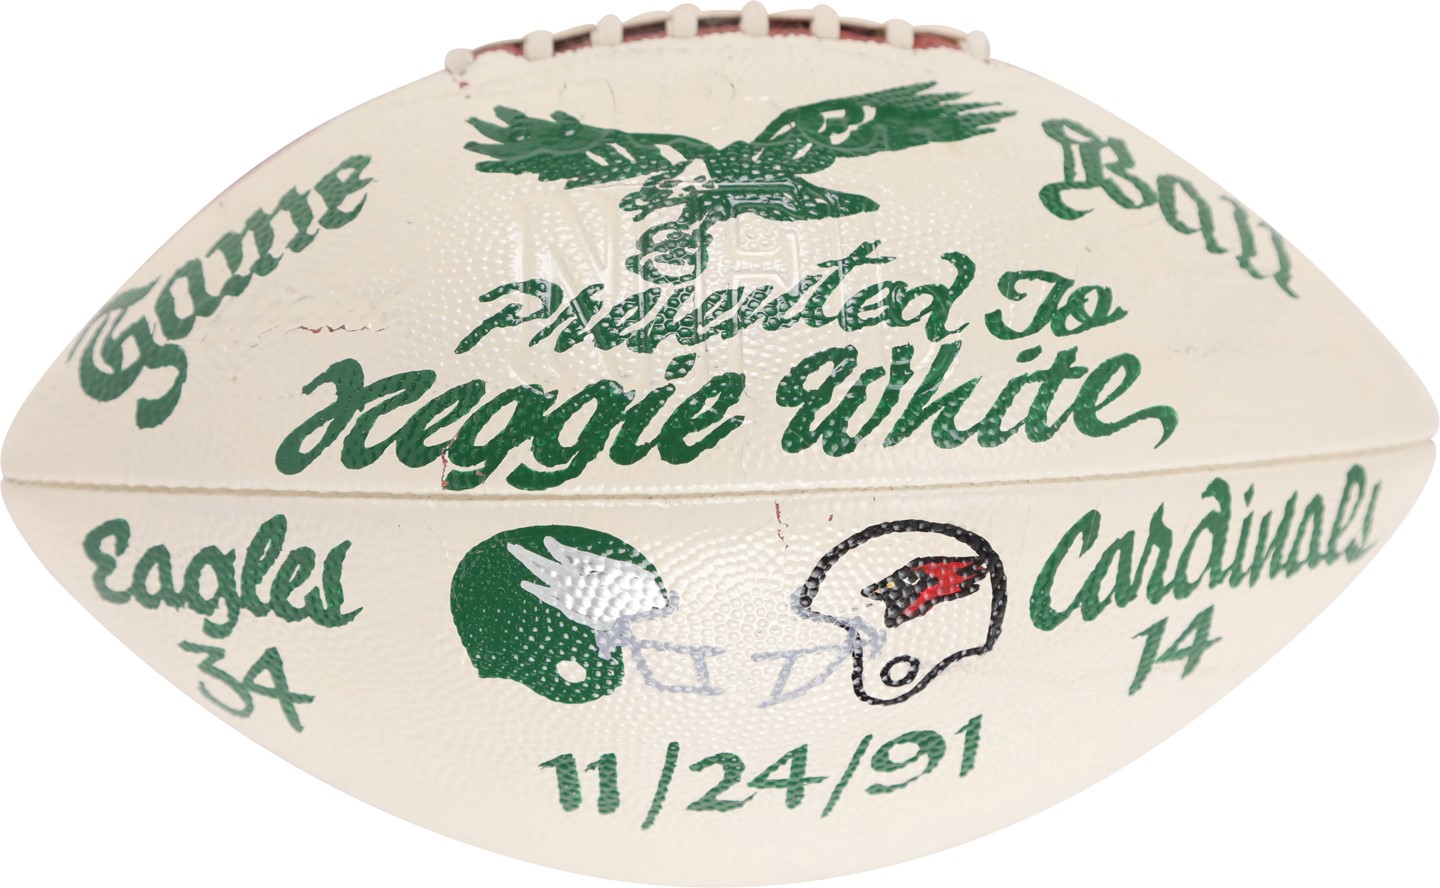 The Philadelphia Eagles Collection - Reggie White November 24, 1991, Philadelphia Eagles Presentational Game Ball from the Reggie White Collection (Family LOA)